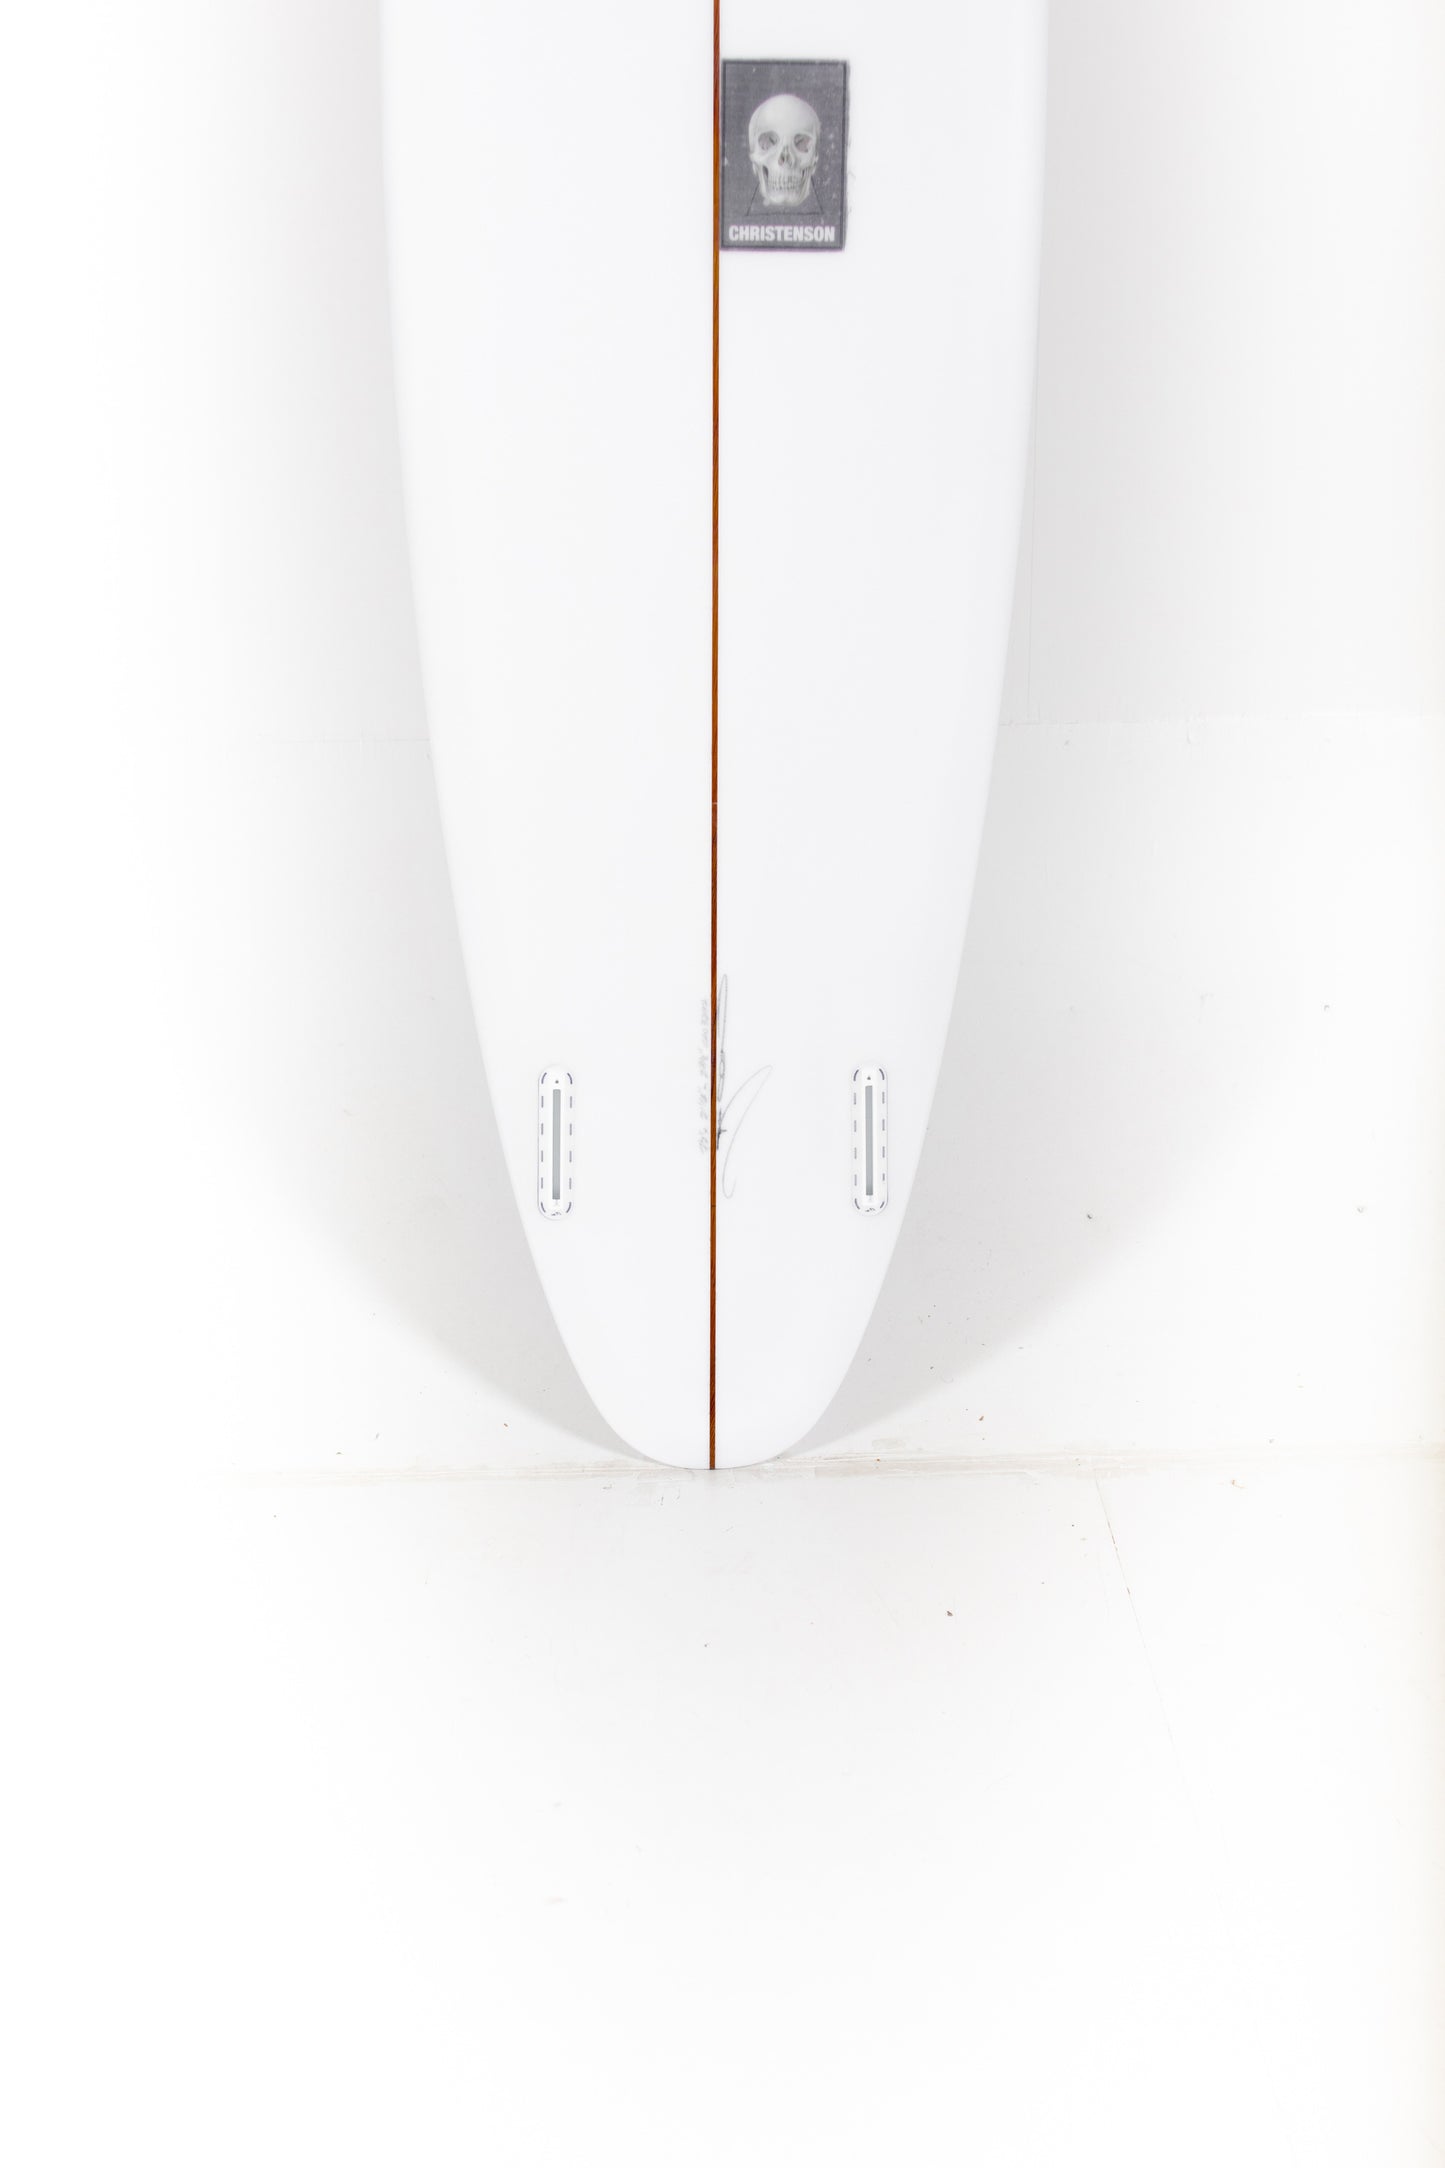 
                  
                    Pukas Surf Shop - Christenson Surfboards - TWIN TRACKER - 7'2" x 21 1/4  x 2 7/8 - CX03297
                  
                